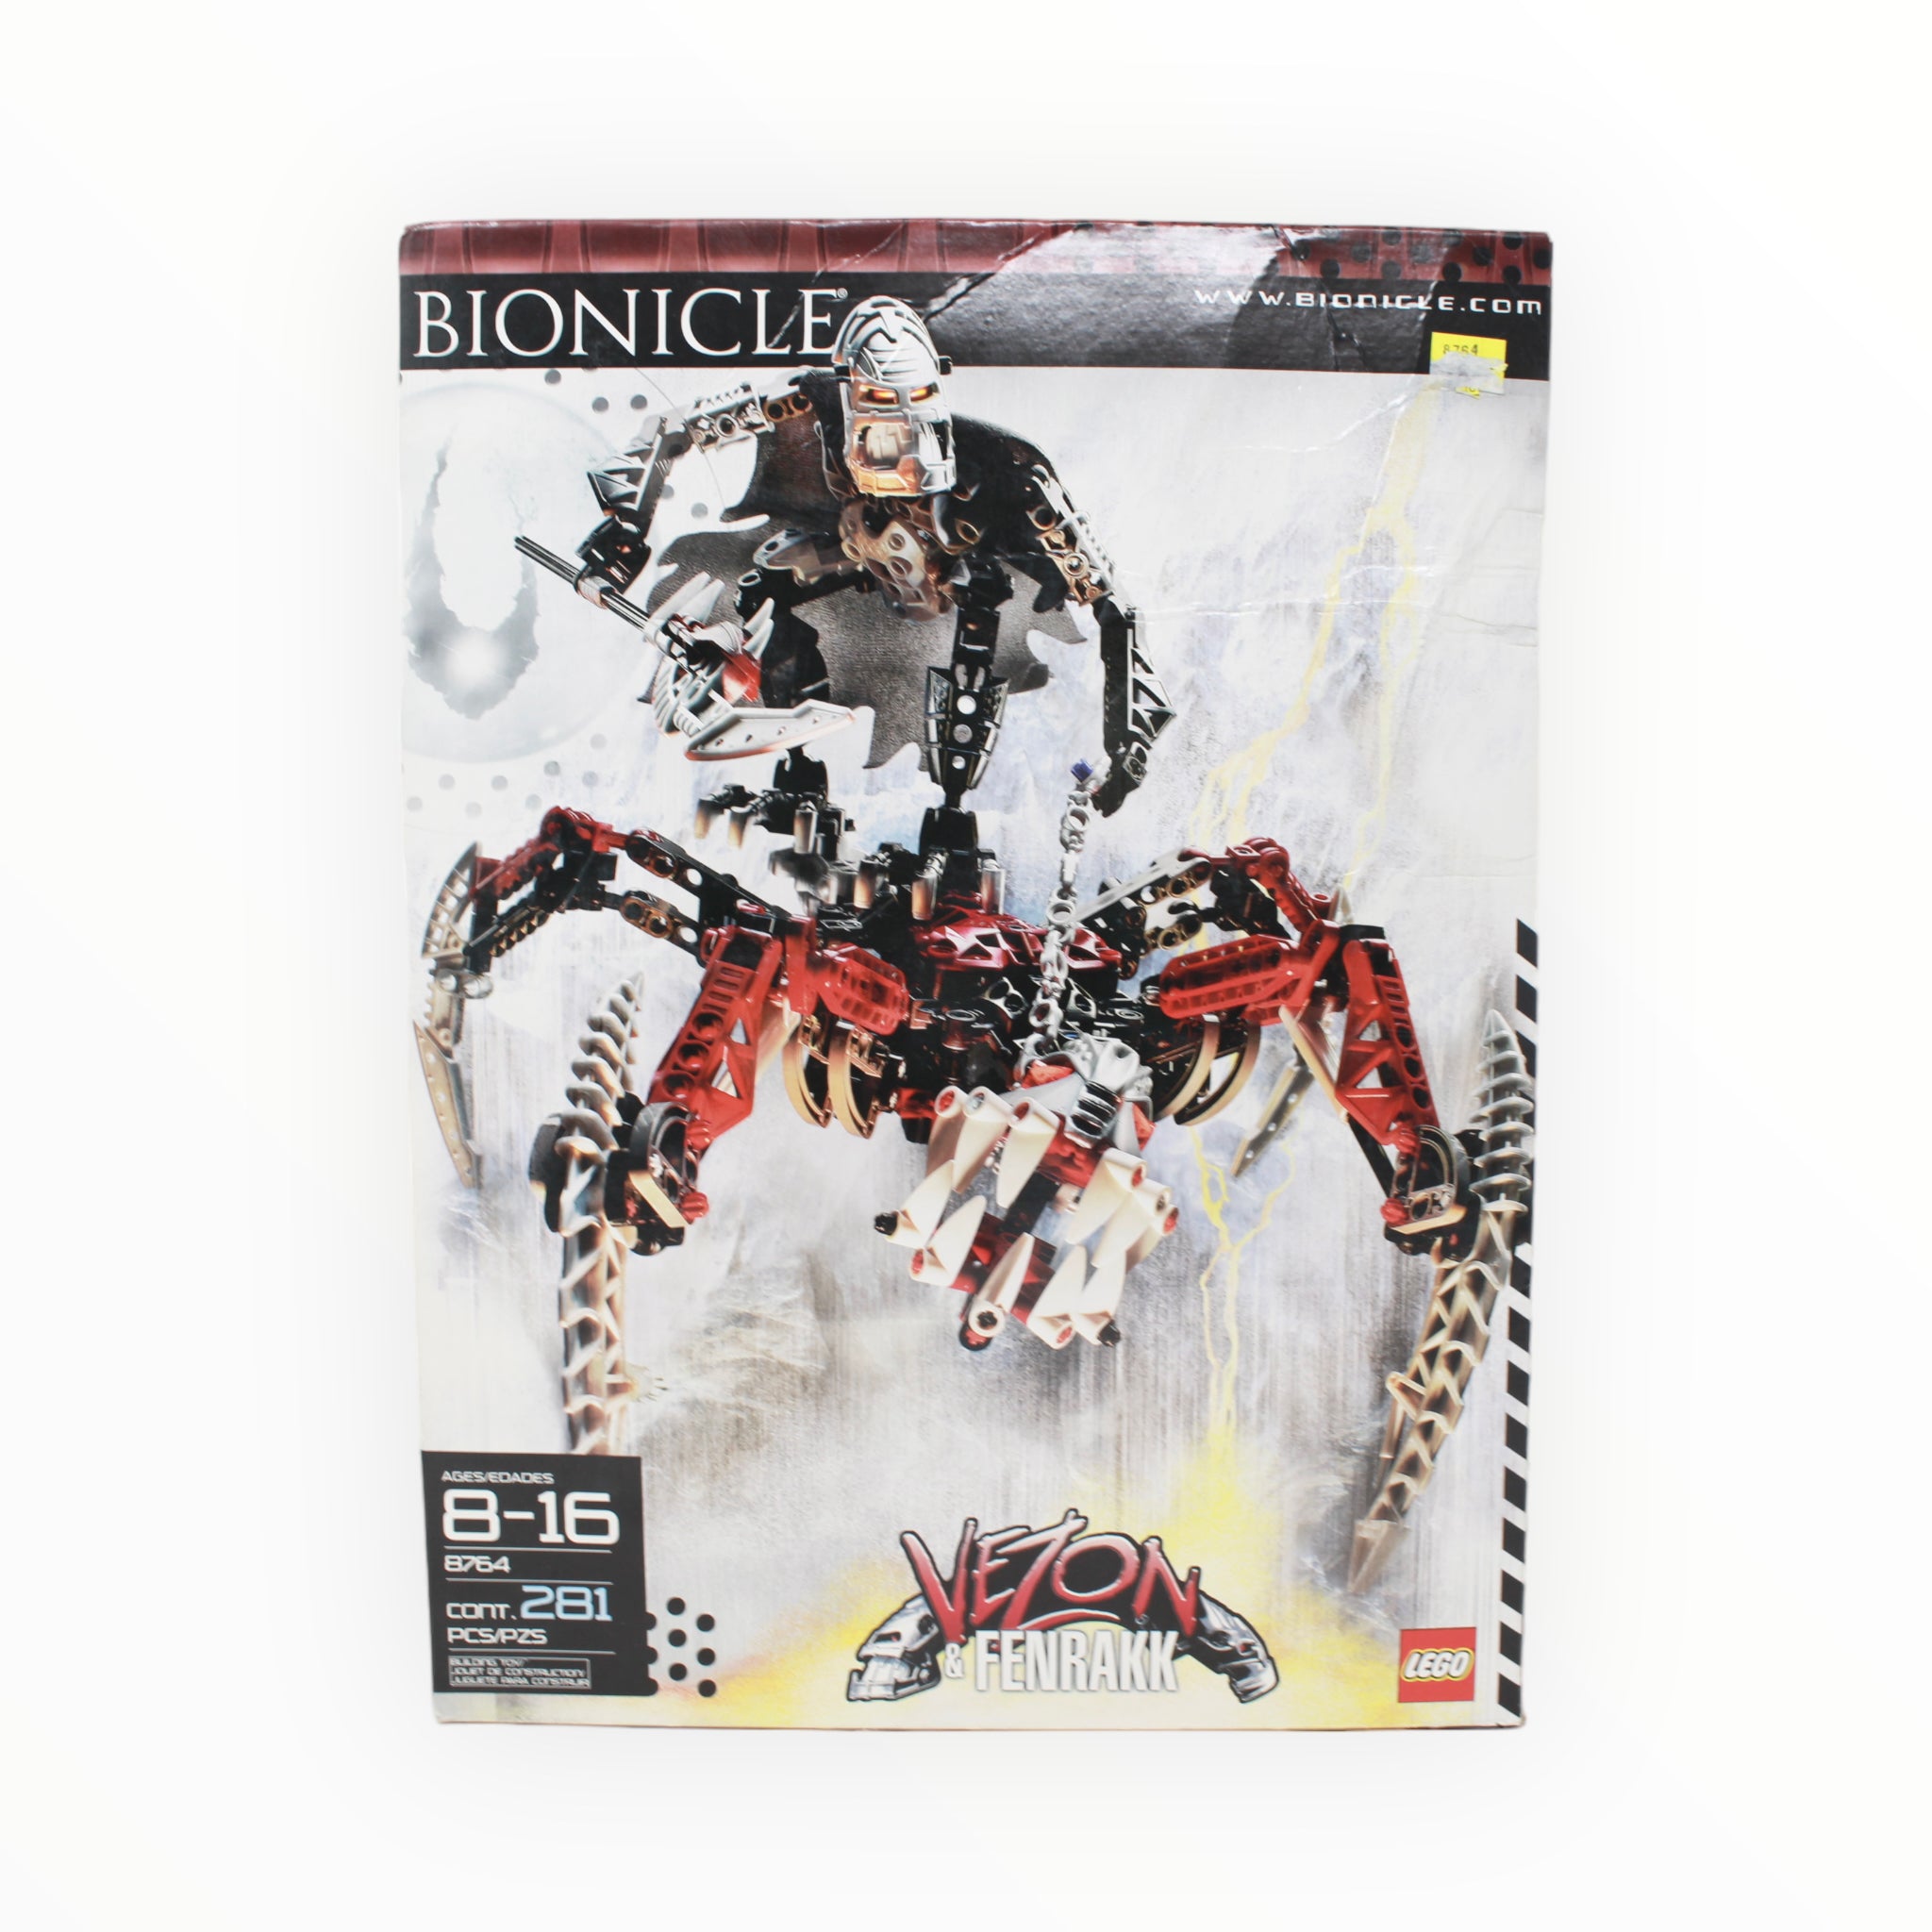 LEGO 8764 Bionicle Vezon & Fenrakk